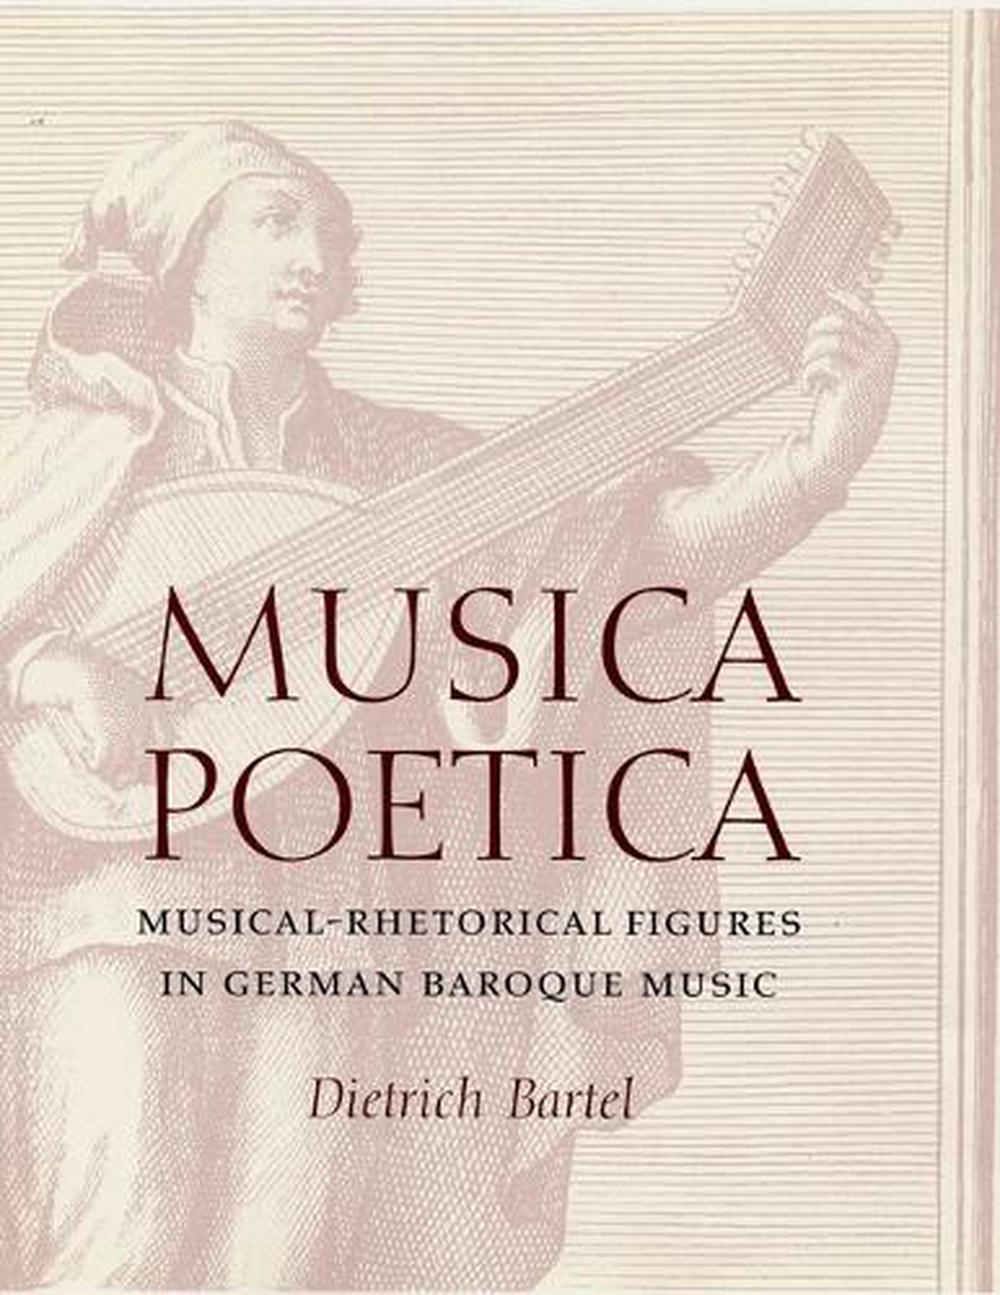 Musica Poetica MusicalRhetorical Figures in German Baroque Music by Dietrich B 9780803212763